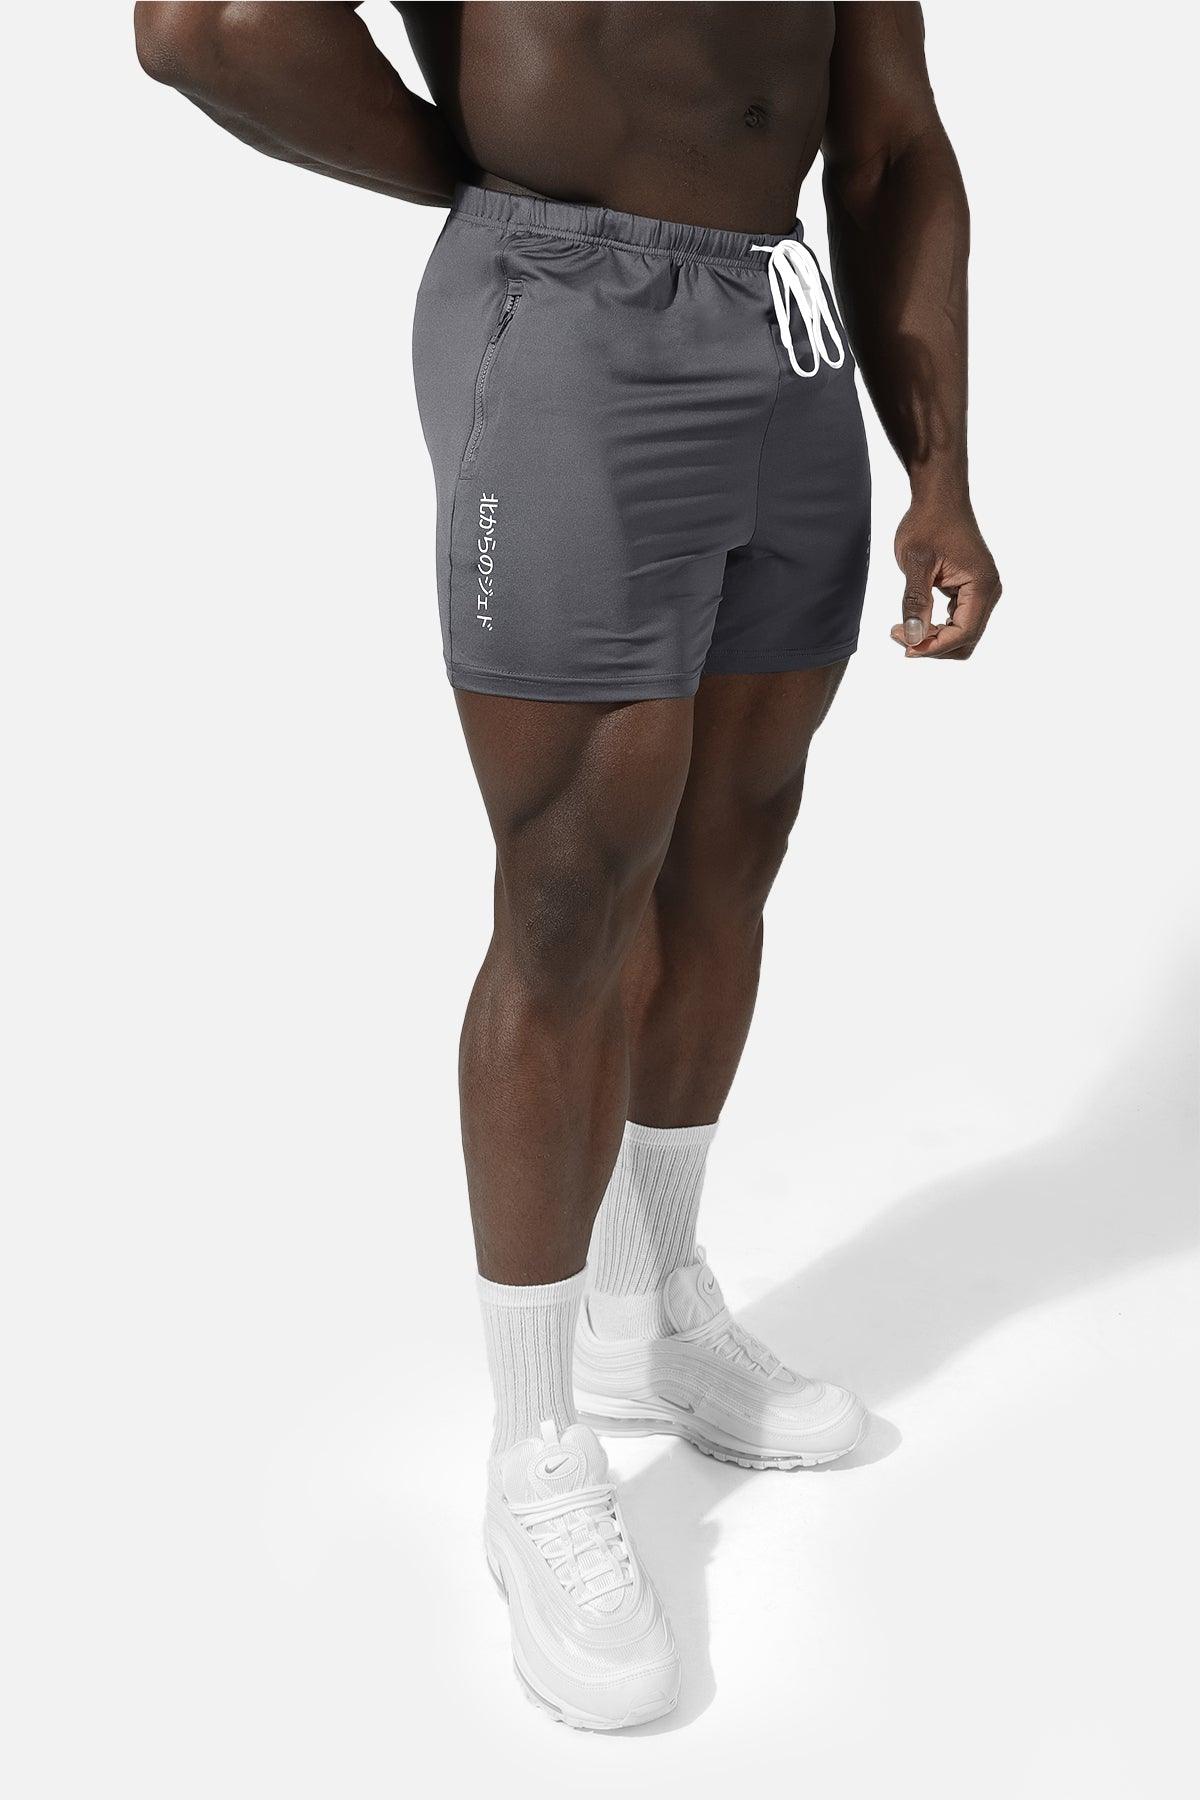 Agile Bodybuilding 4'' Shorts w Zipper Pockets - Tiger Gray